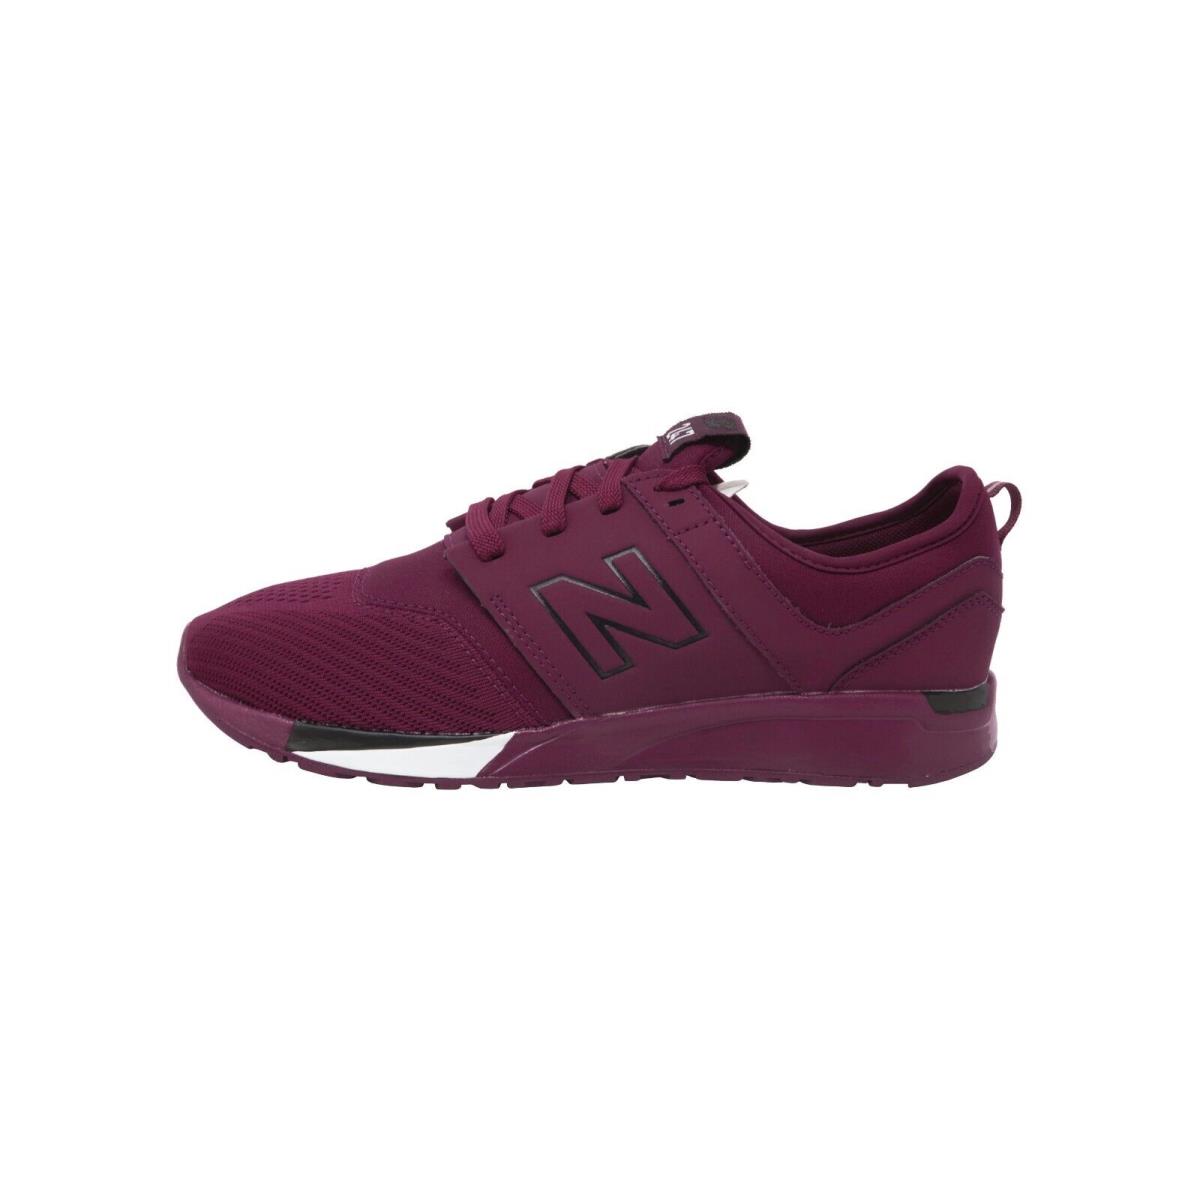 New Balance 247 Big Kids Running Shoes Sneakers KL247T4G - Purple/black